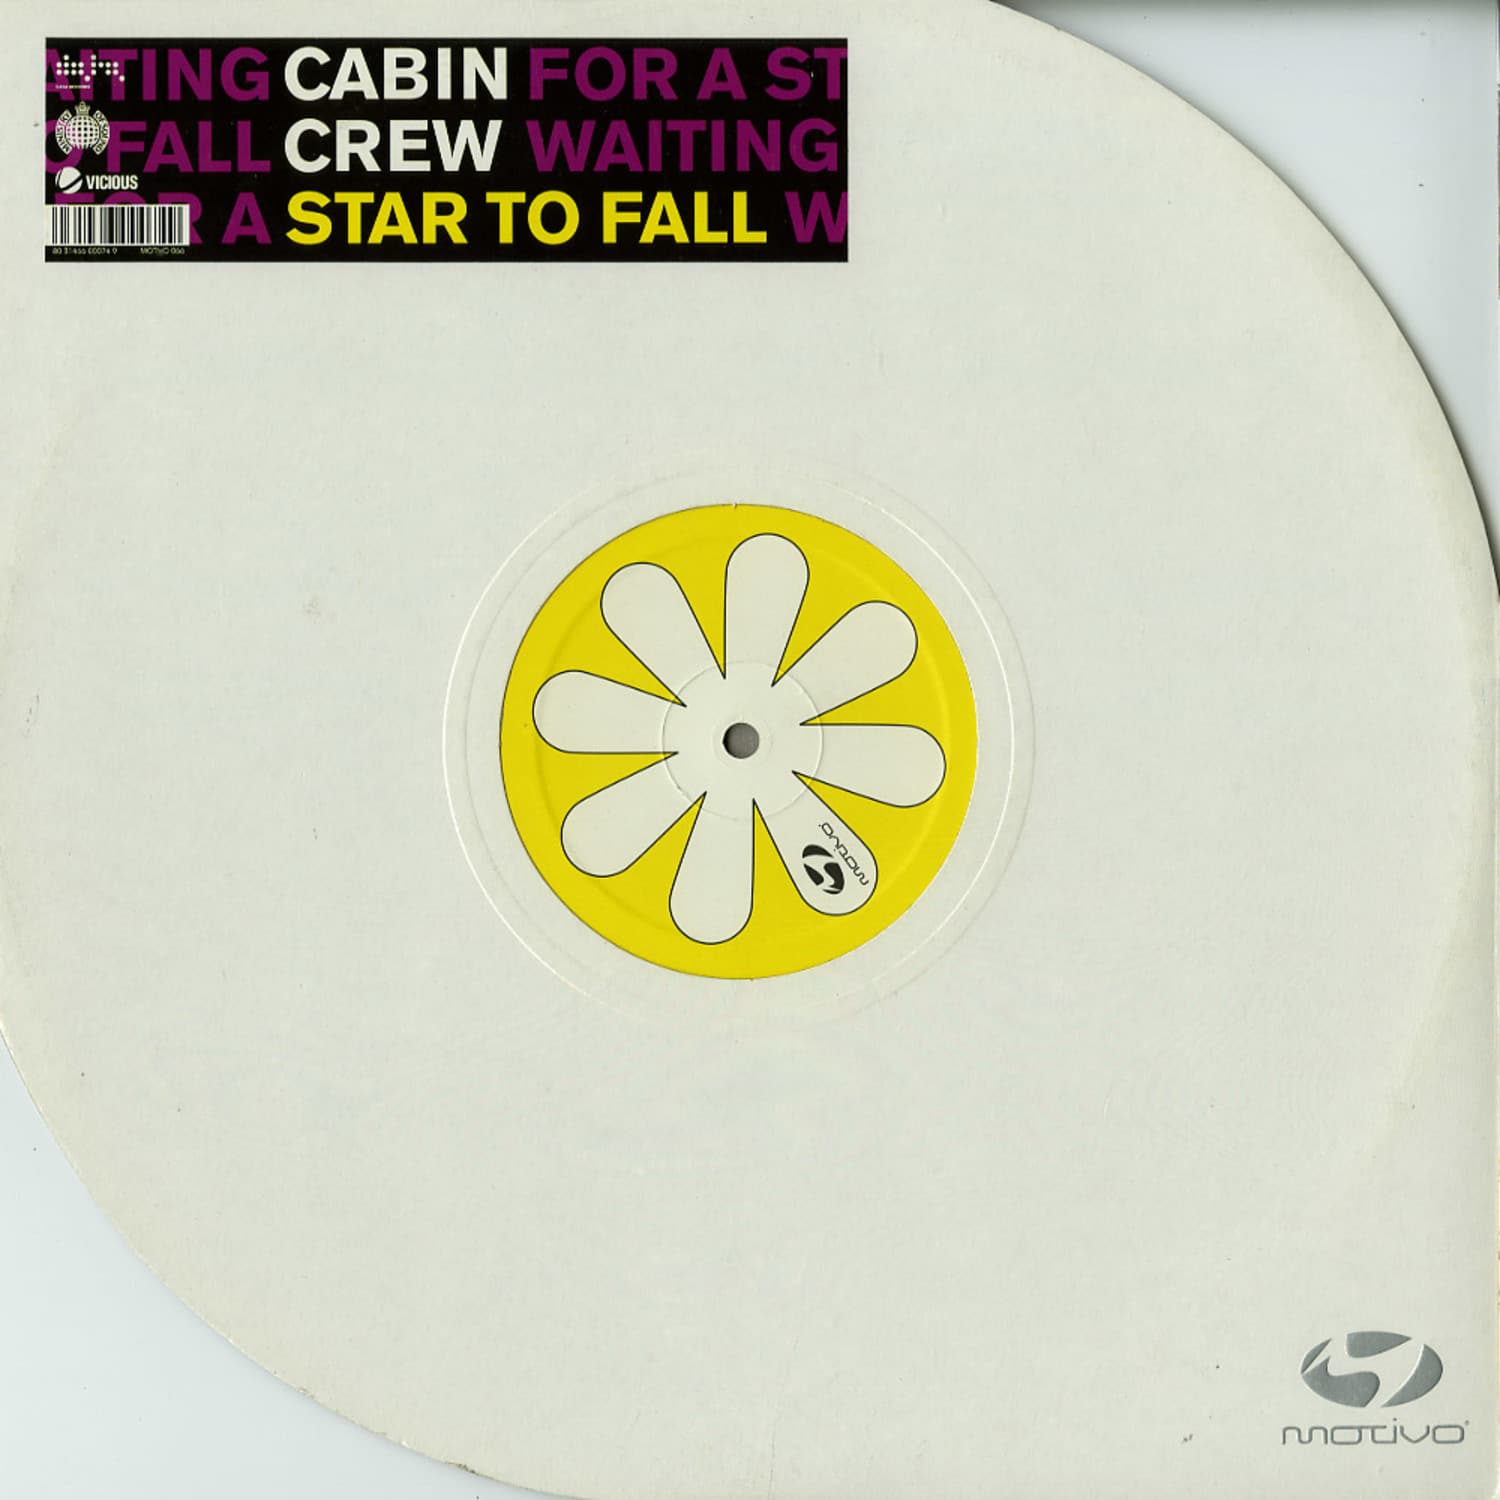 Cabin Crew - STAR TO FALL